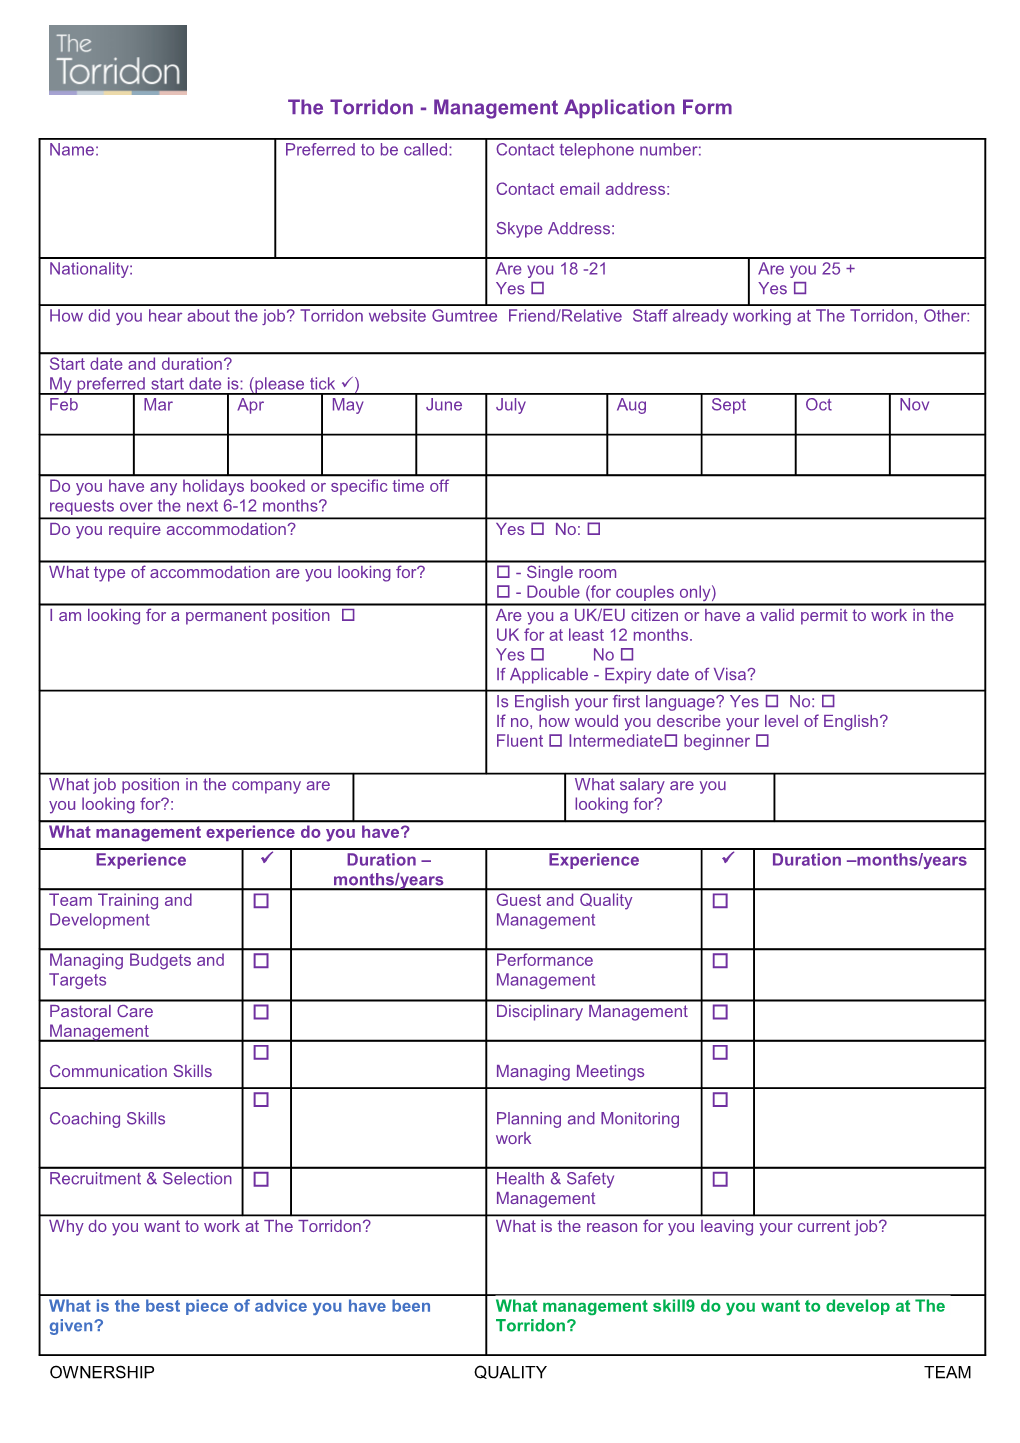 The Torridon - Managementapplication Form